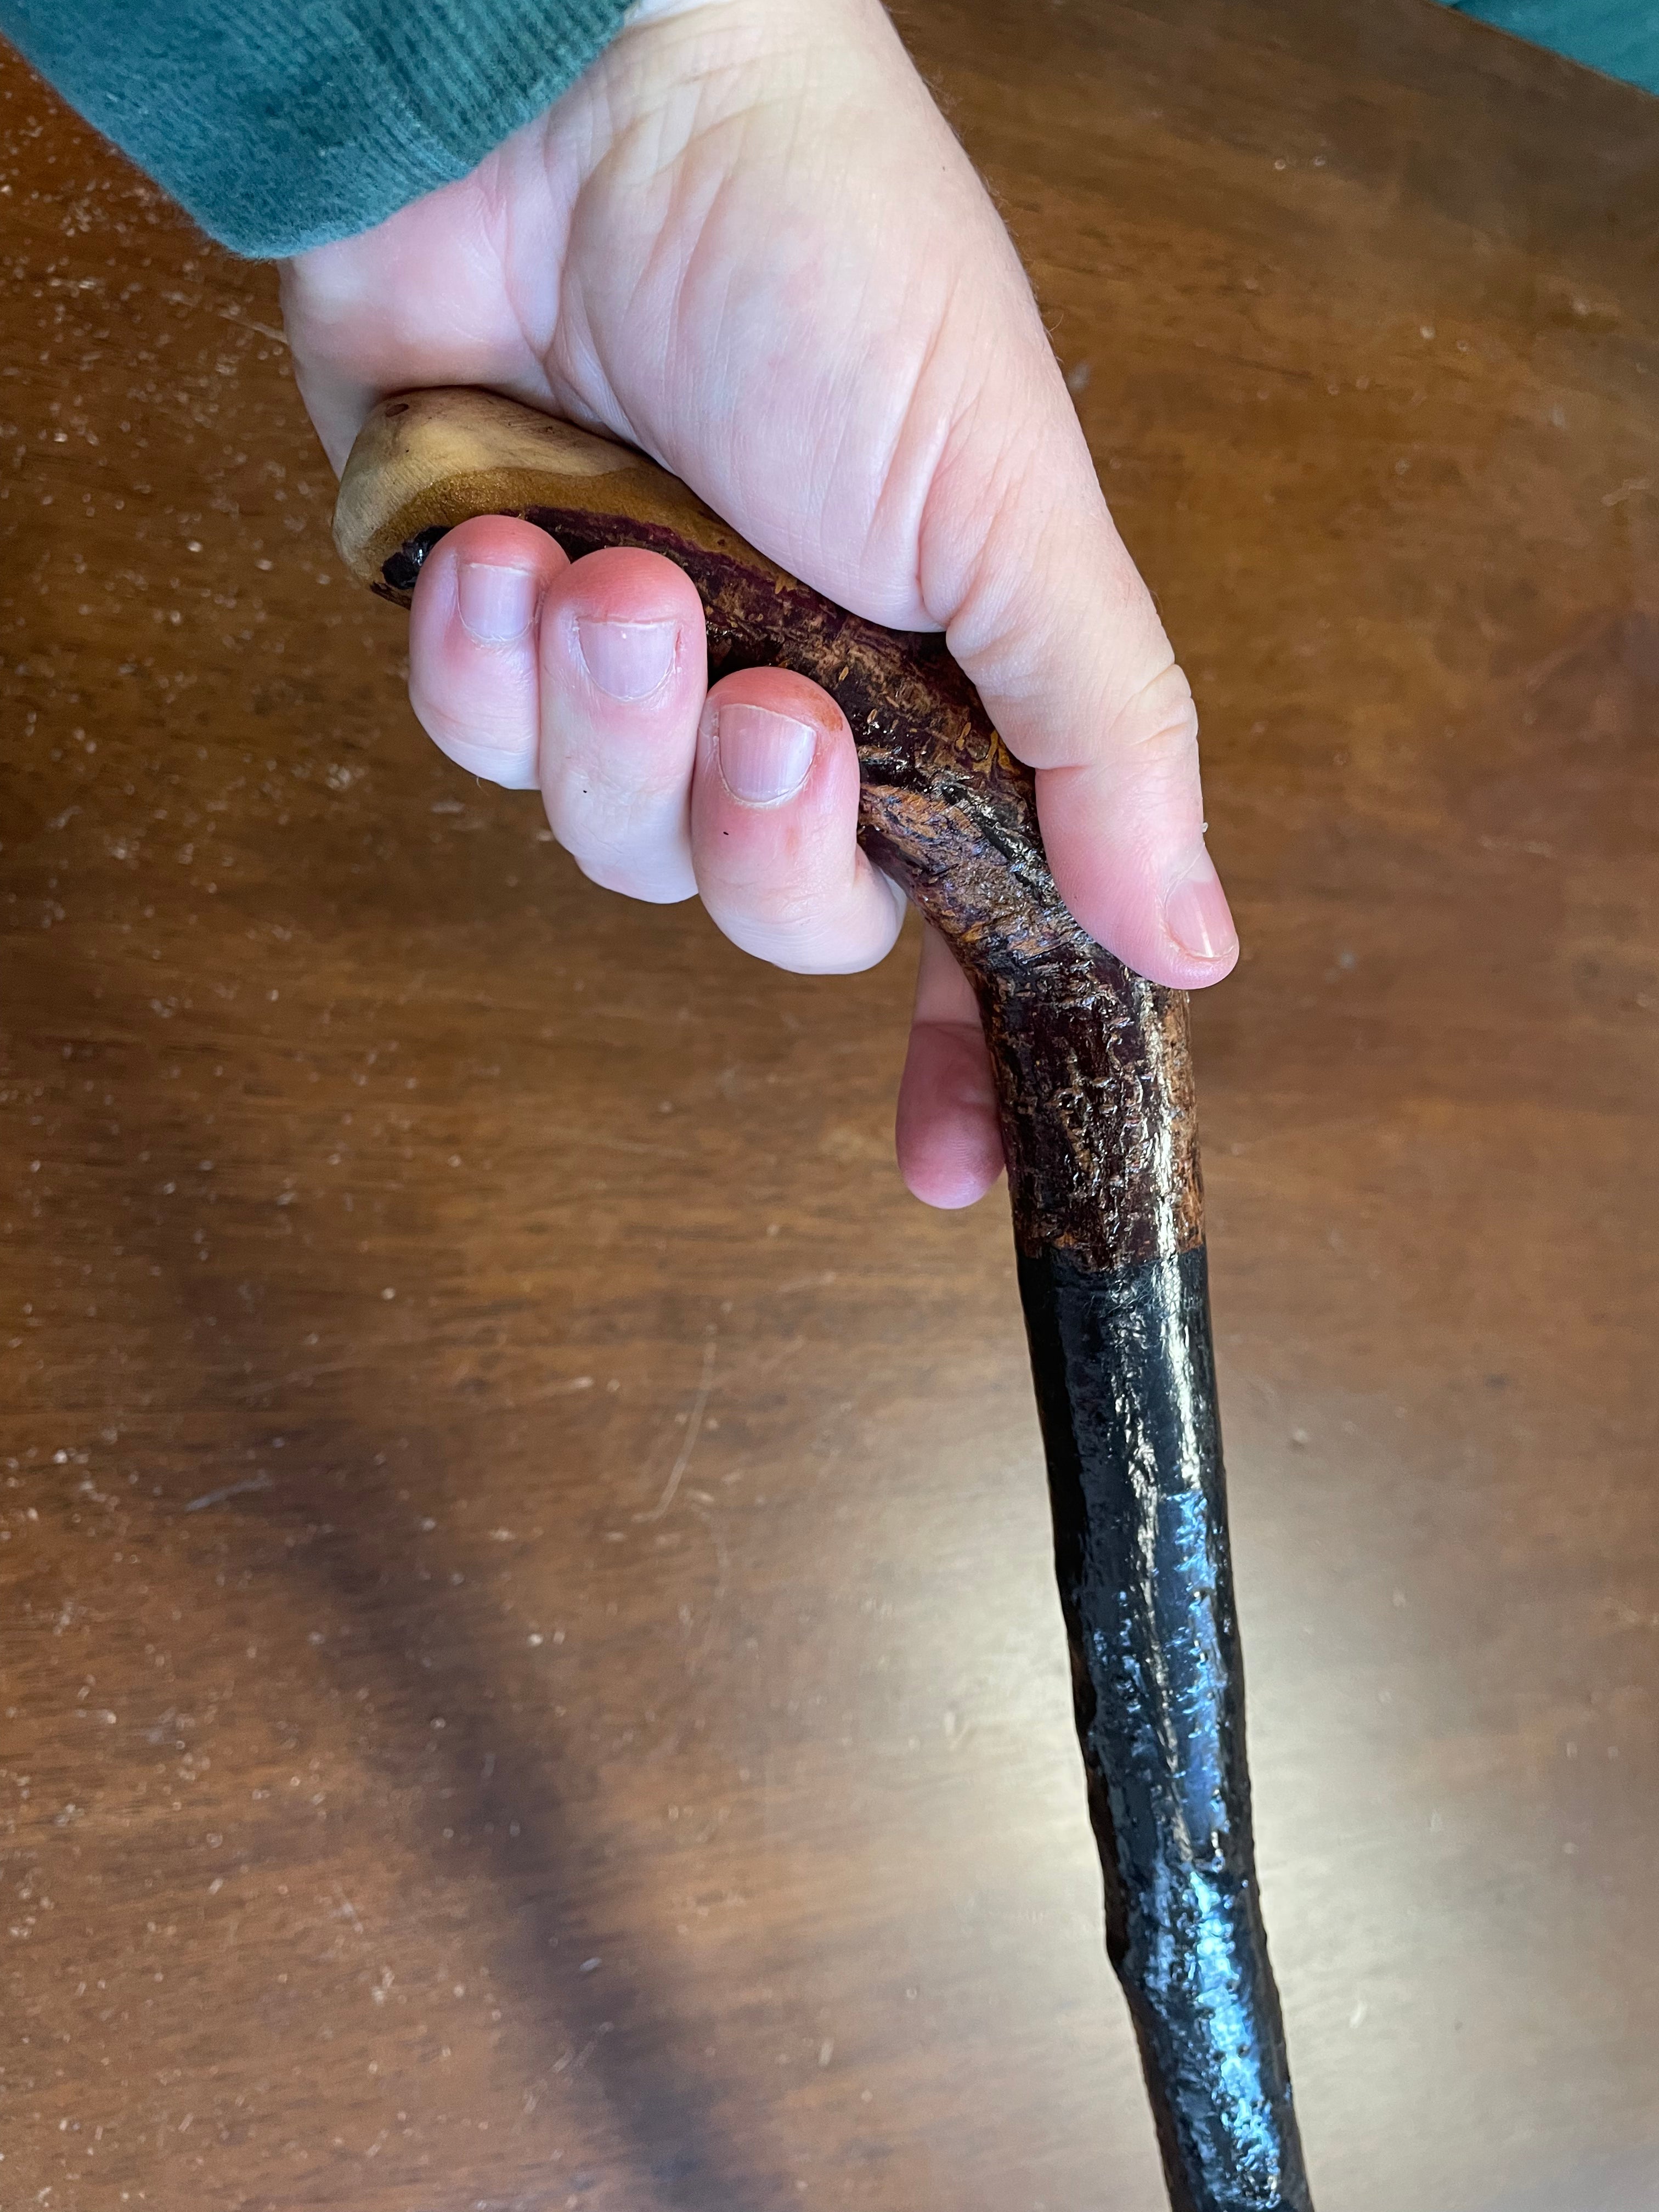 Blackthorn Walking Stick 37 1/2 inch- Handmade in Ireland